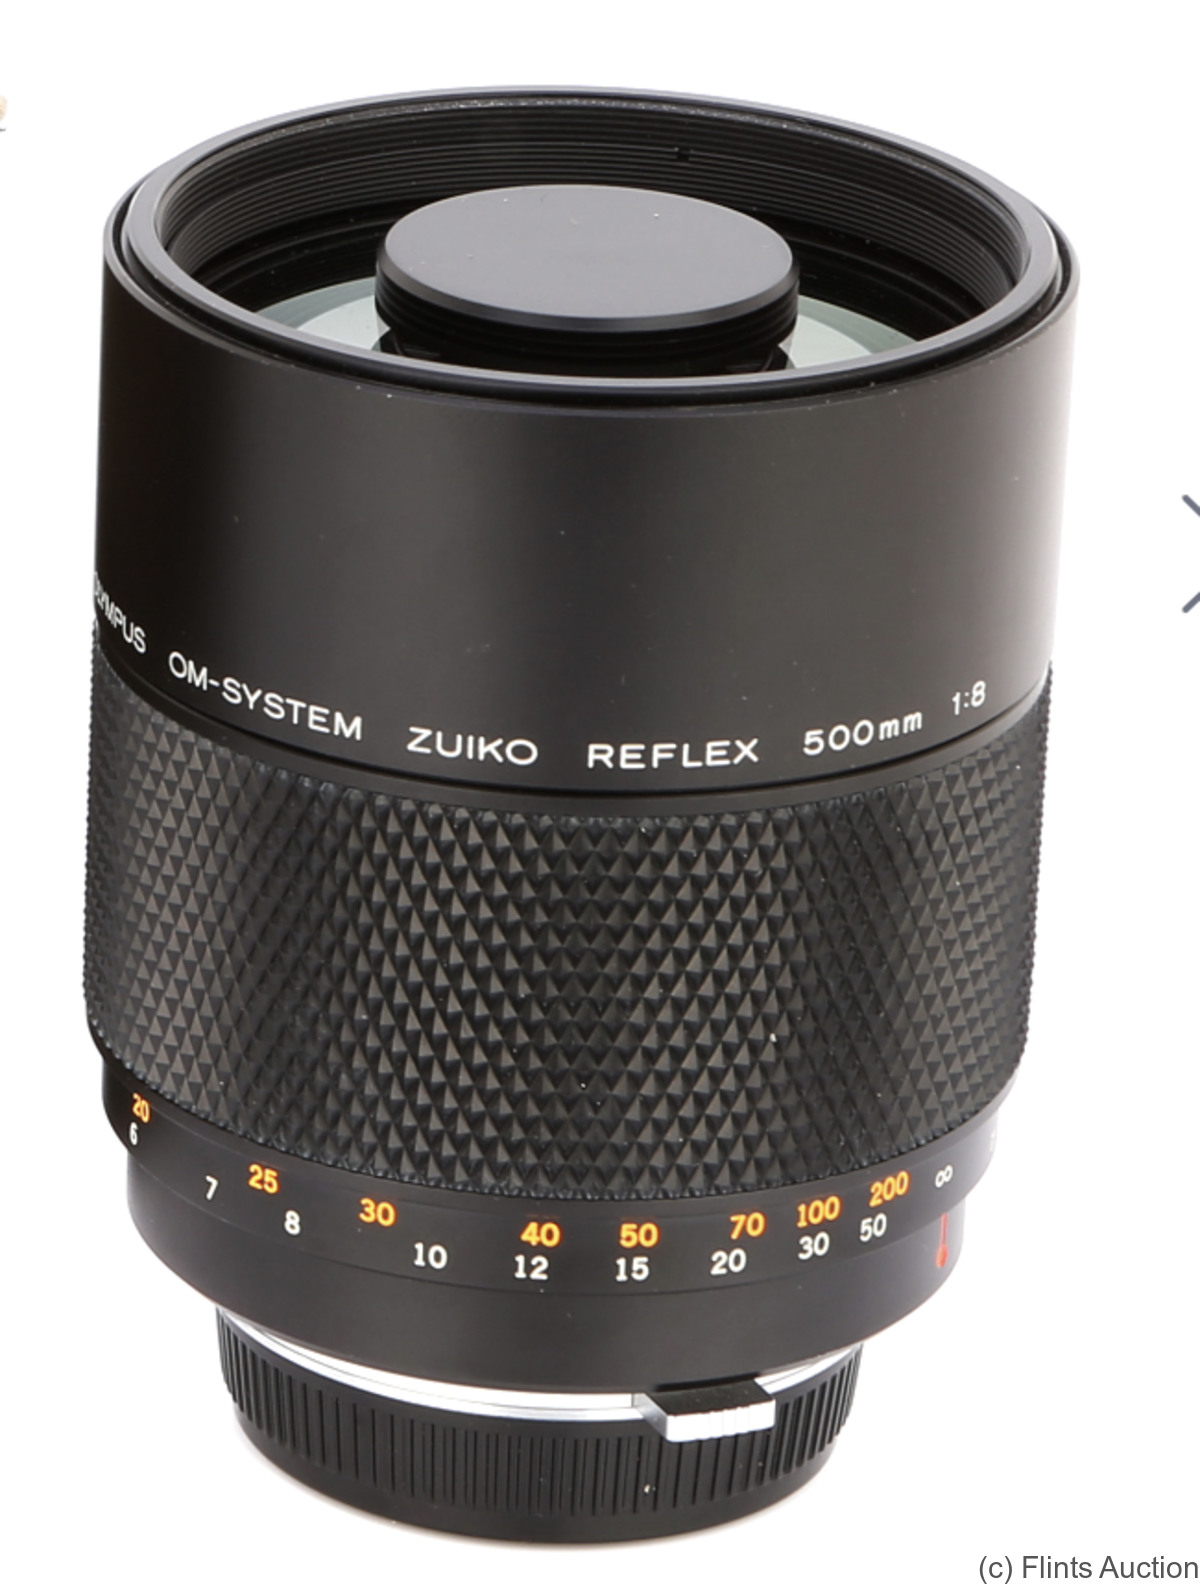 Olympus: 500mm (50cm) f8 Zuiko Reflex (OM) camera